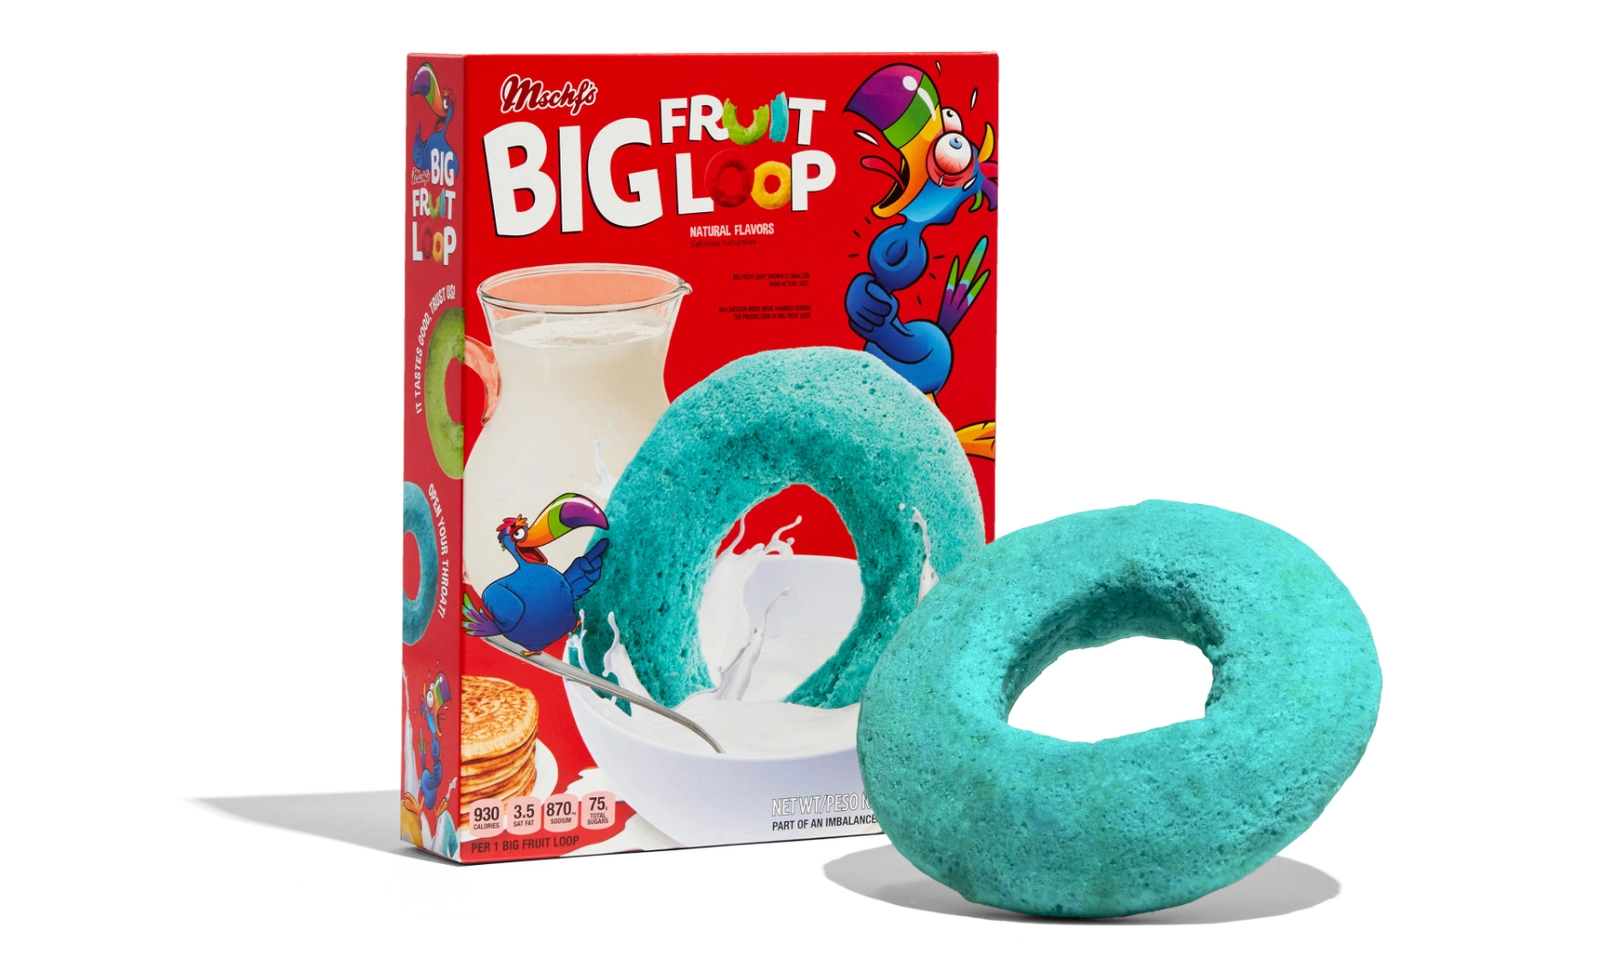 MSCHF 推出麦片产品「Big Fruit Loop」